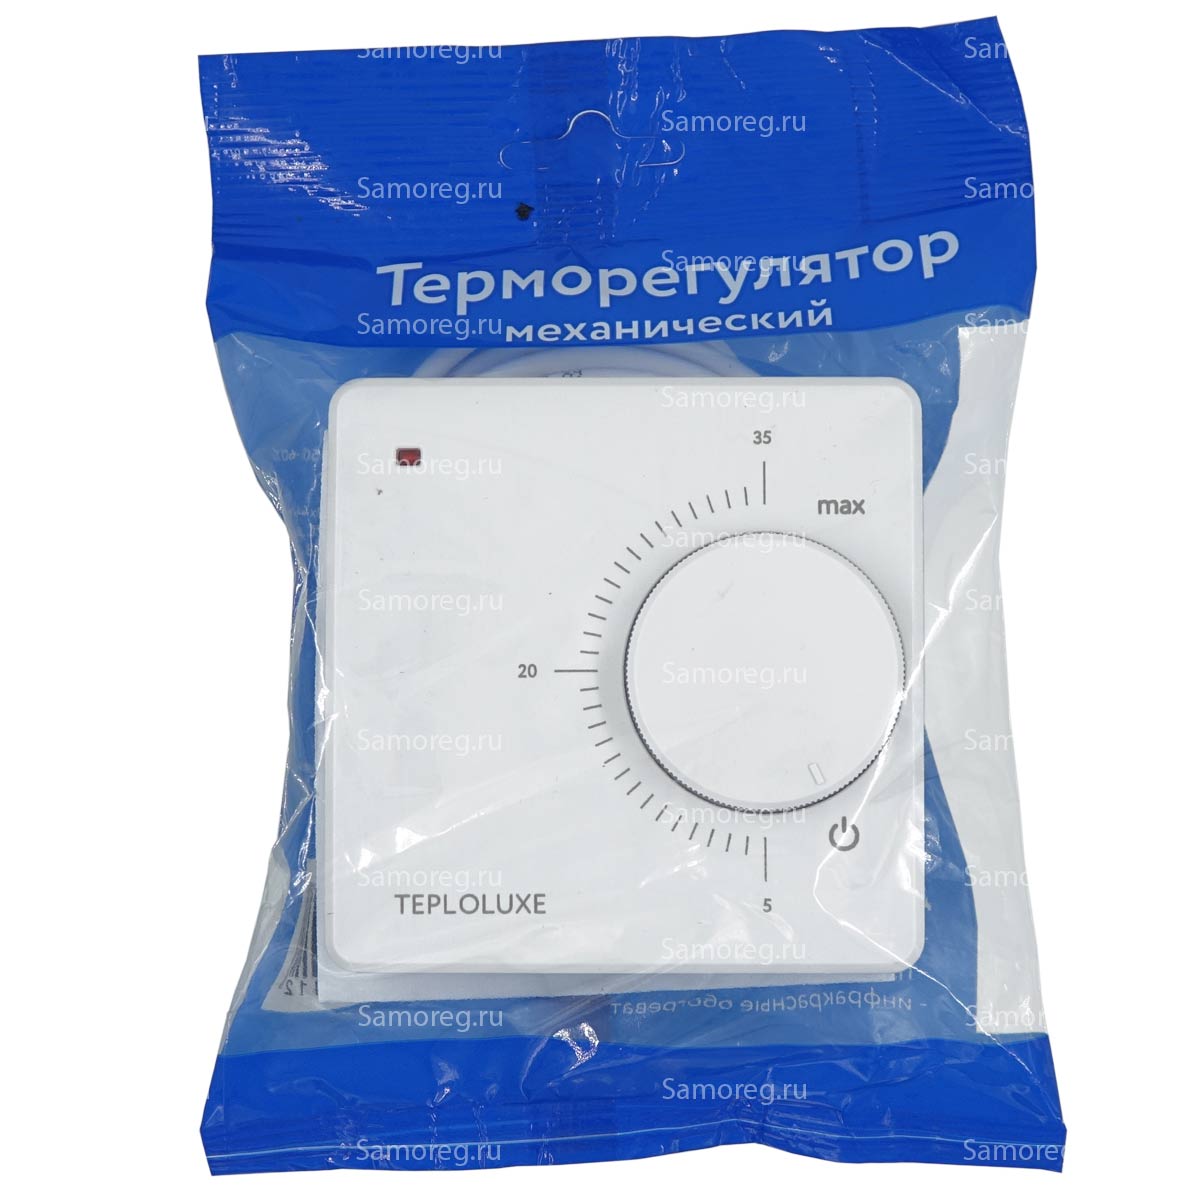 Терморегулятор Теплолюкс LC 001 Flow-pack белый